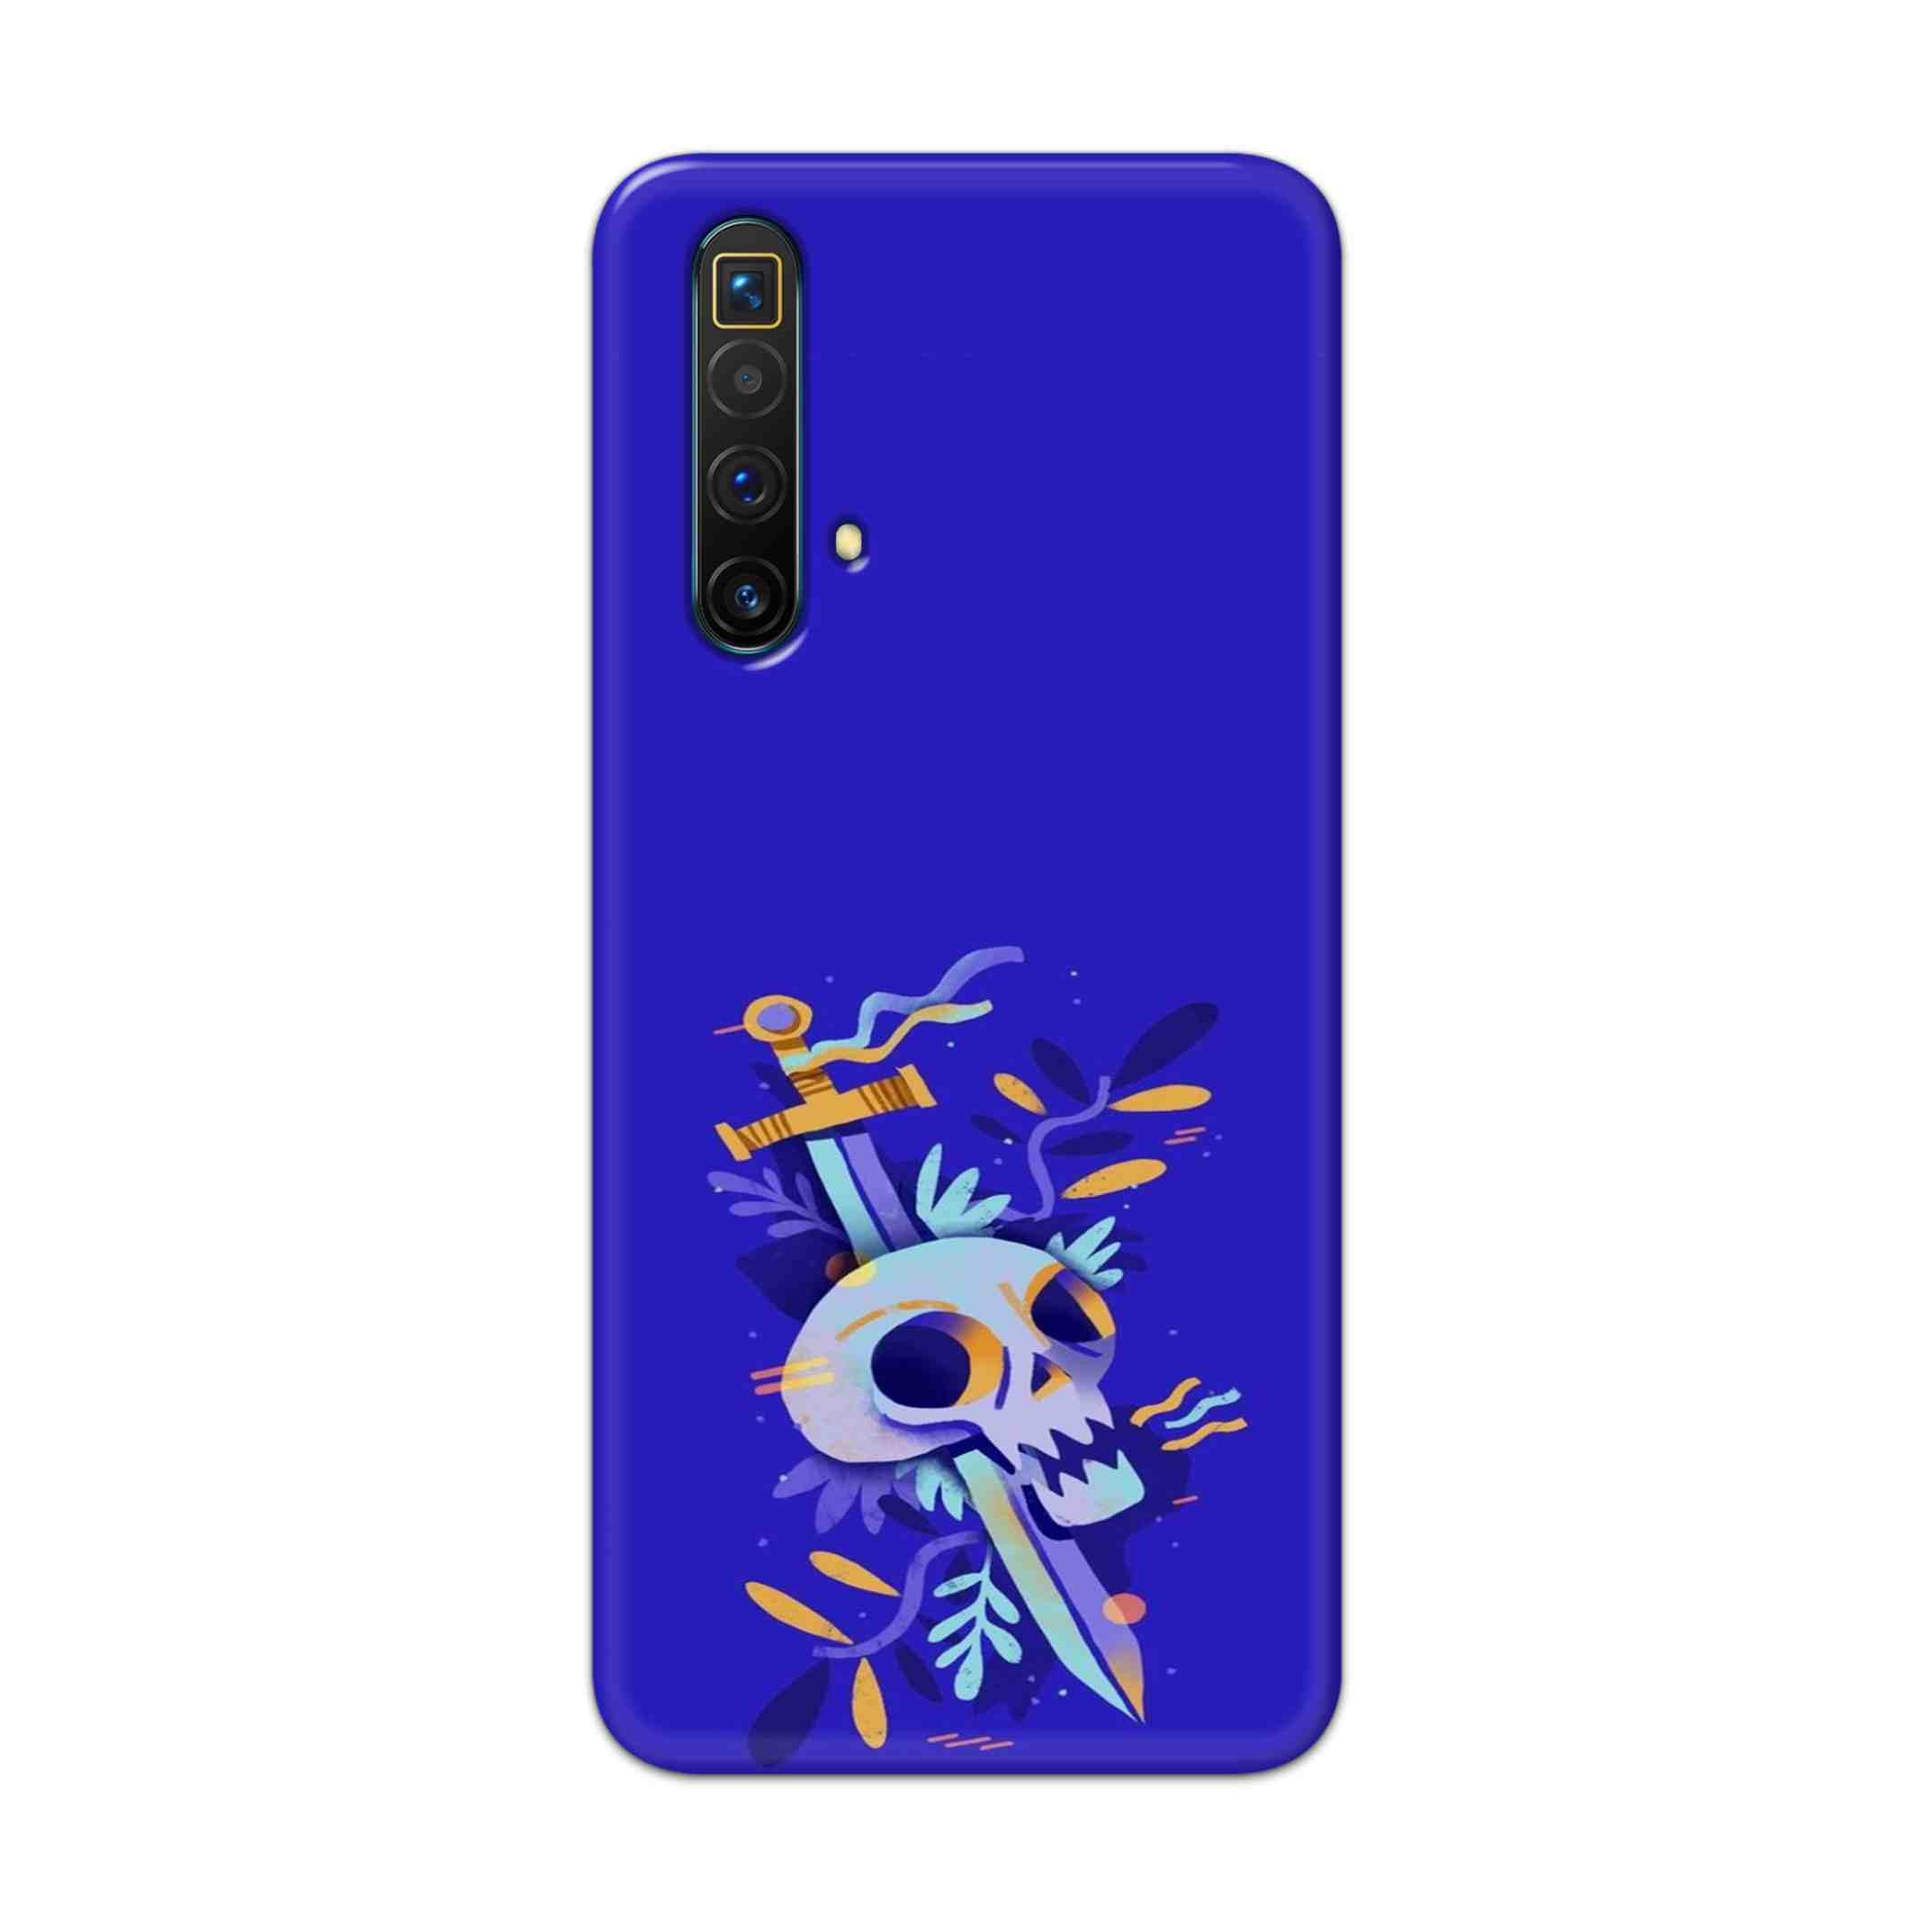 Buy Blue Skull Hard Back Mobile Phone Case Cover For Realme X3 Superzoom Online